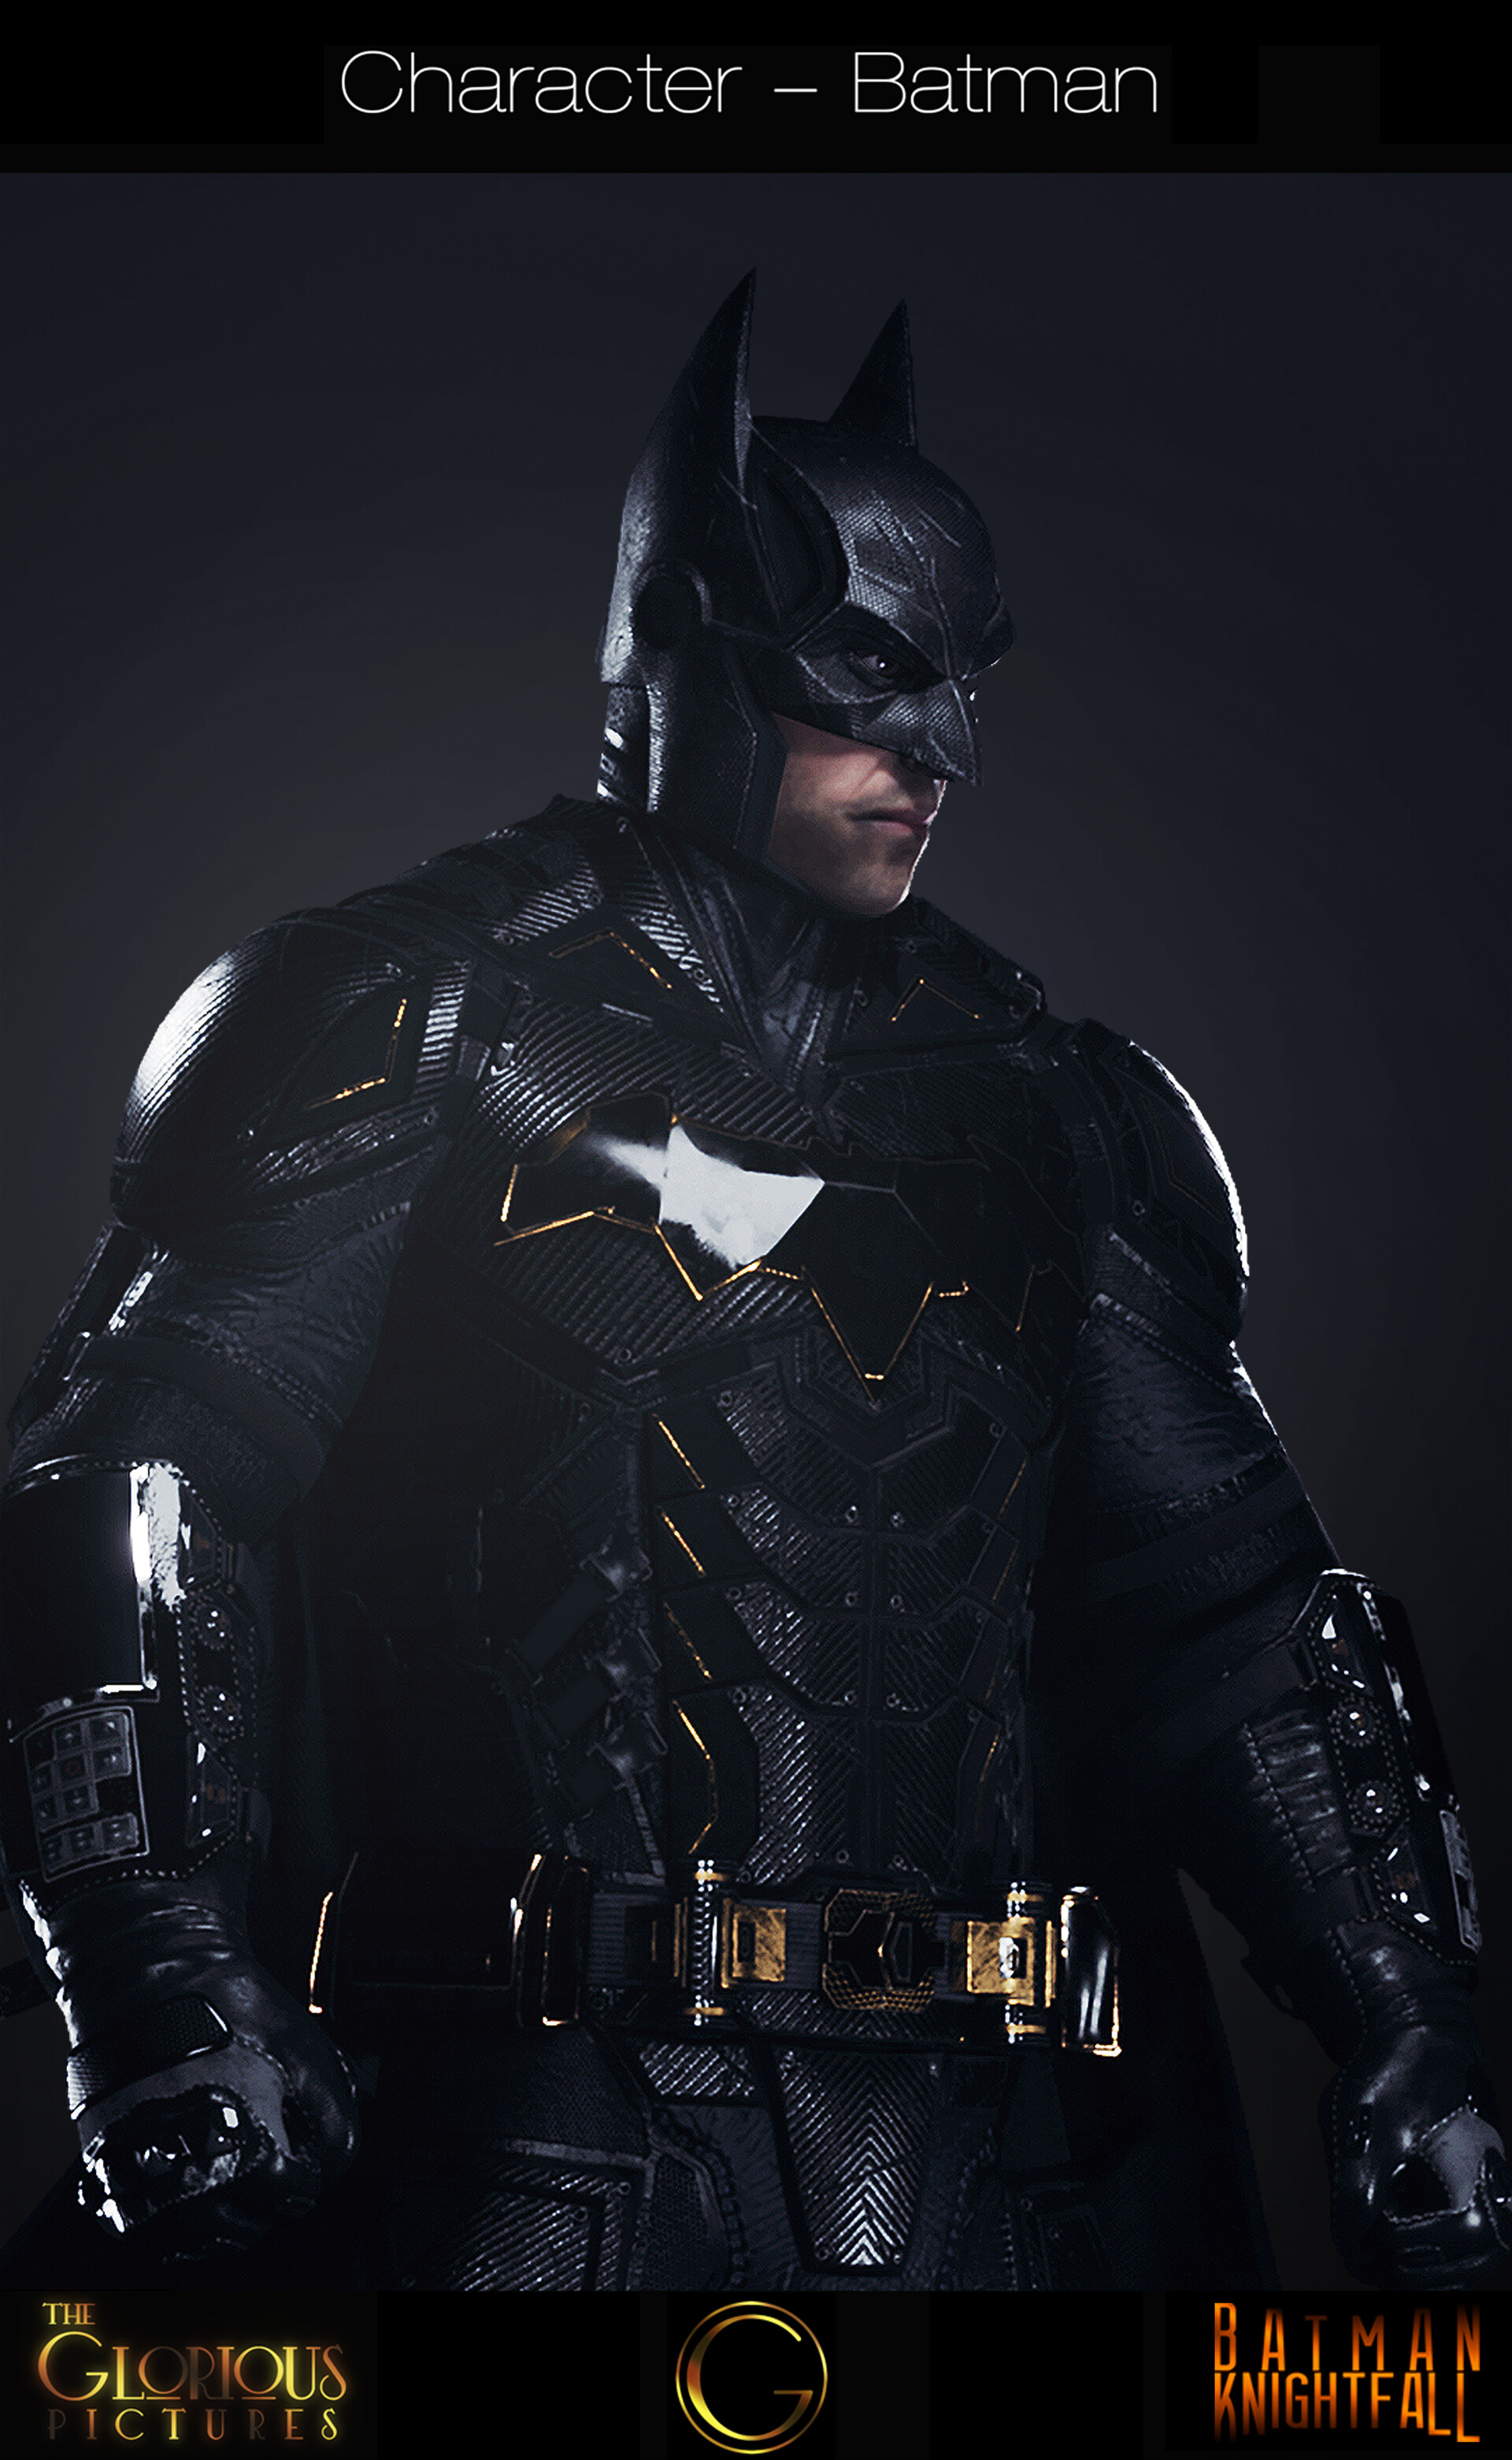 The Glorious Pictures - BATMAN KNIGHTFALL - Character - The Batman - UE4